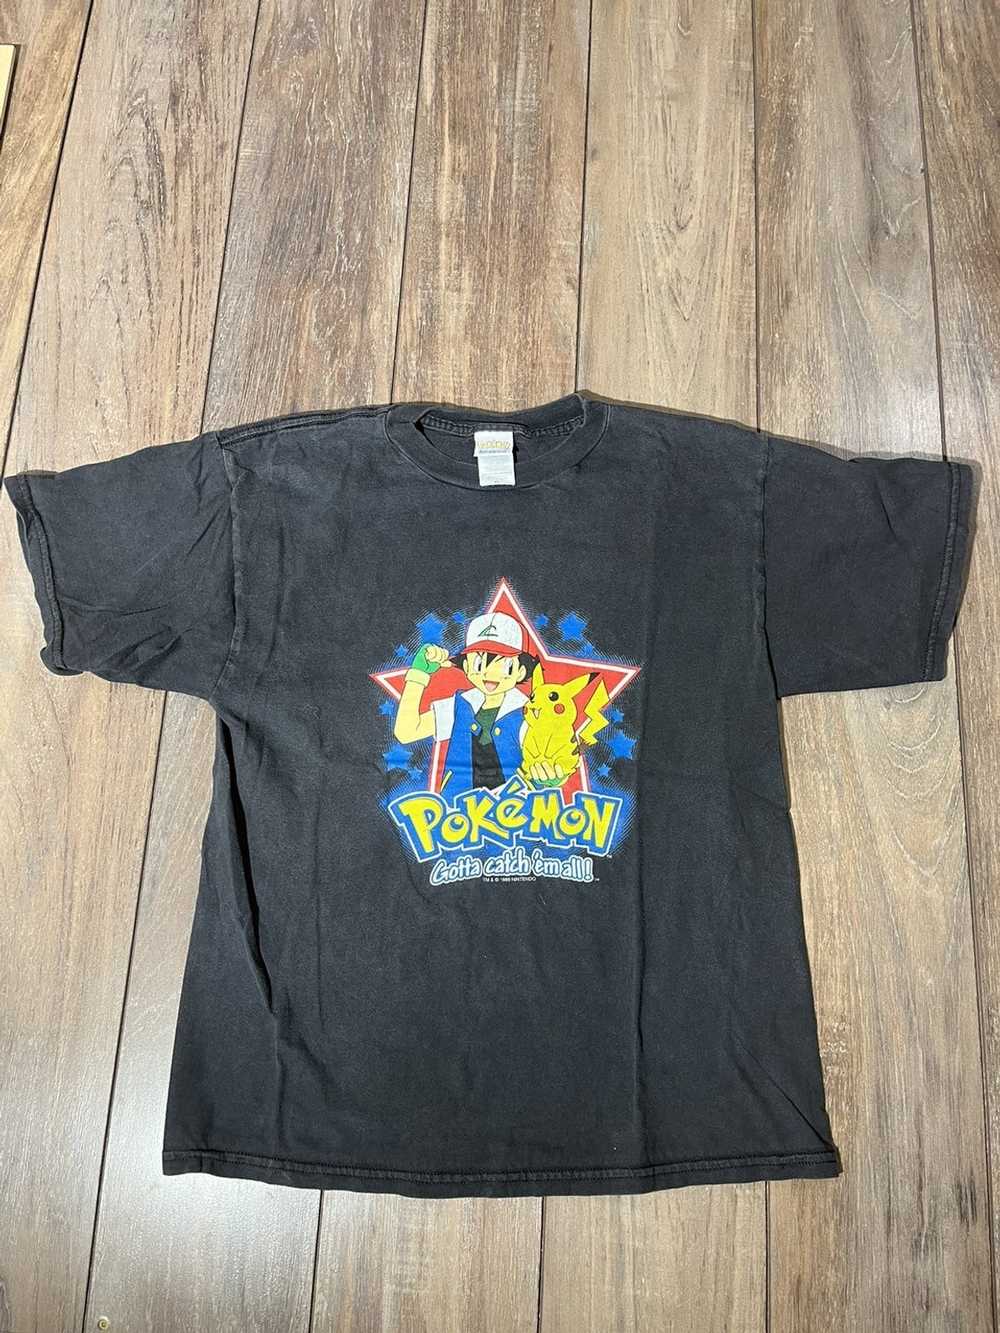 Pokemon × Vintage Vintage 1999 Pokémon t shirt - image 2